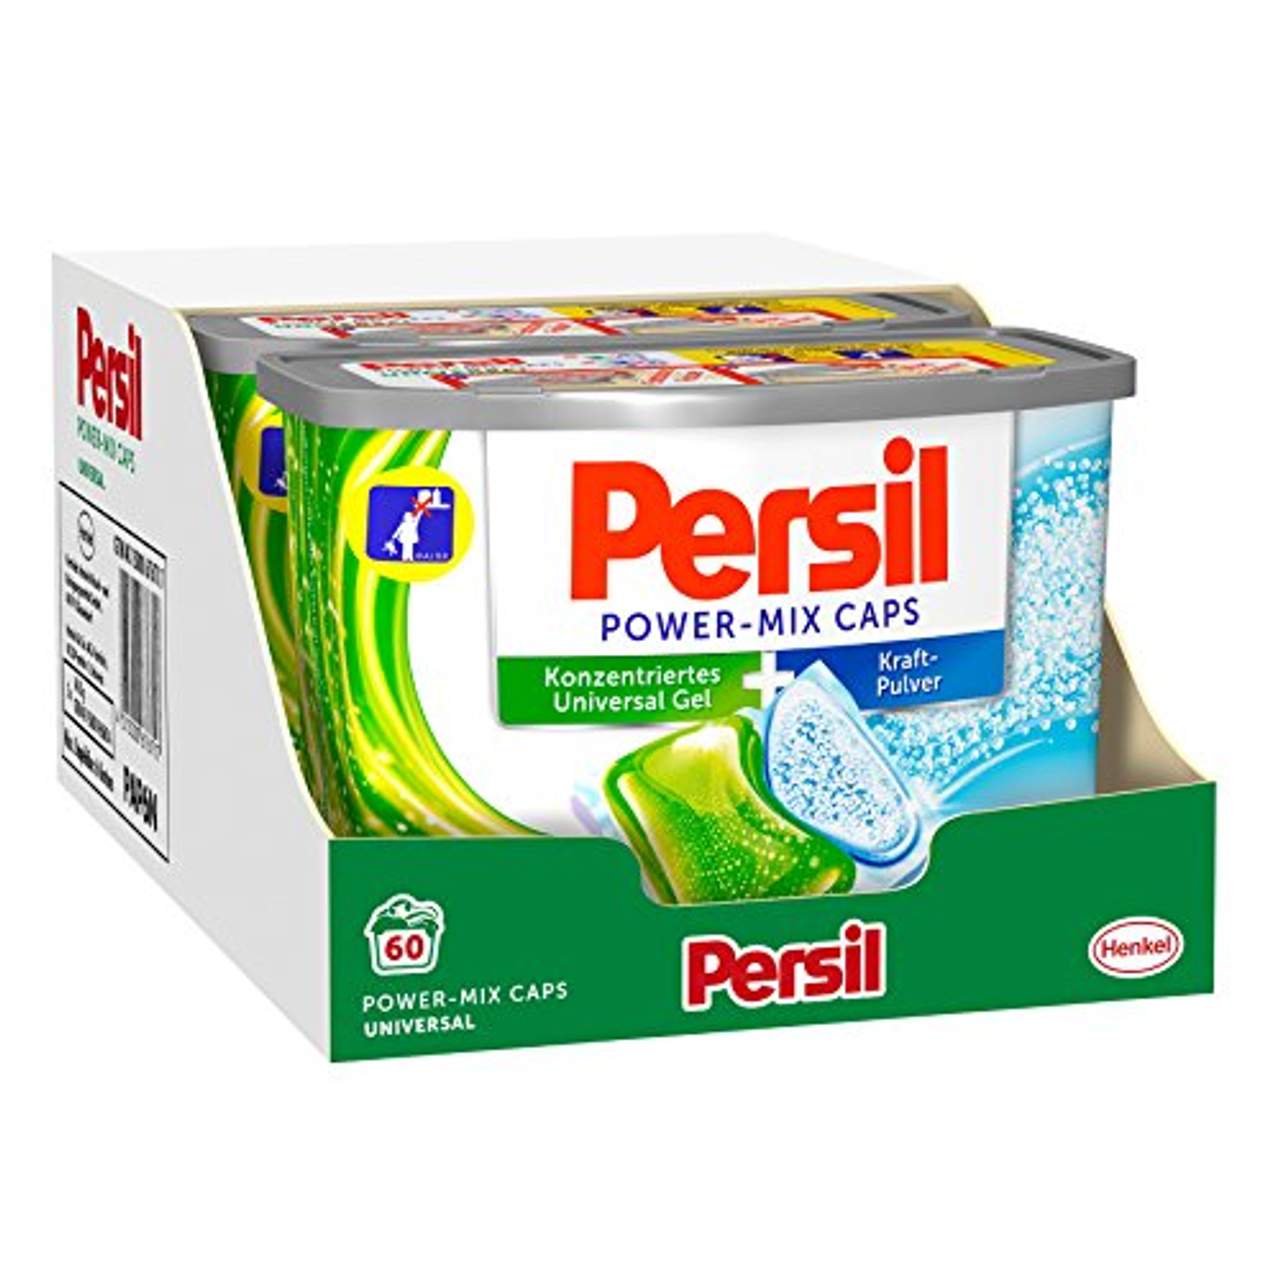 Persil Universal Power-Mix Caps